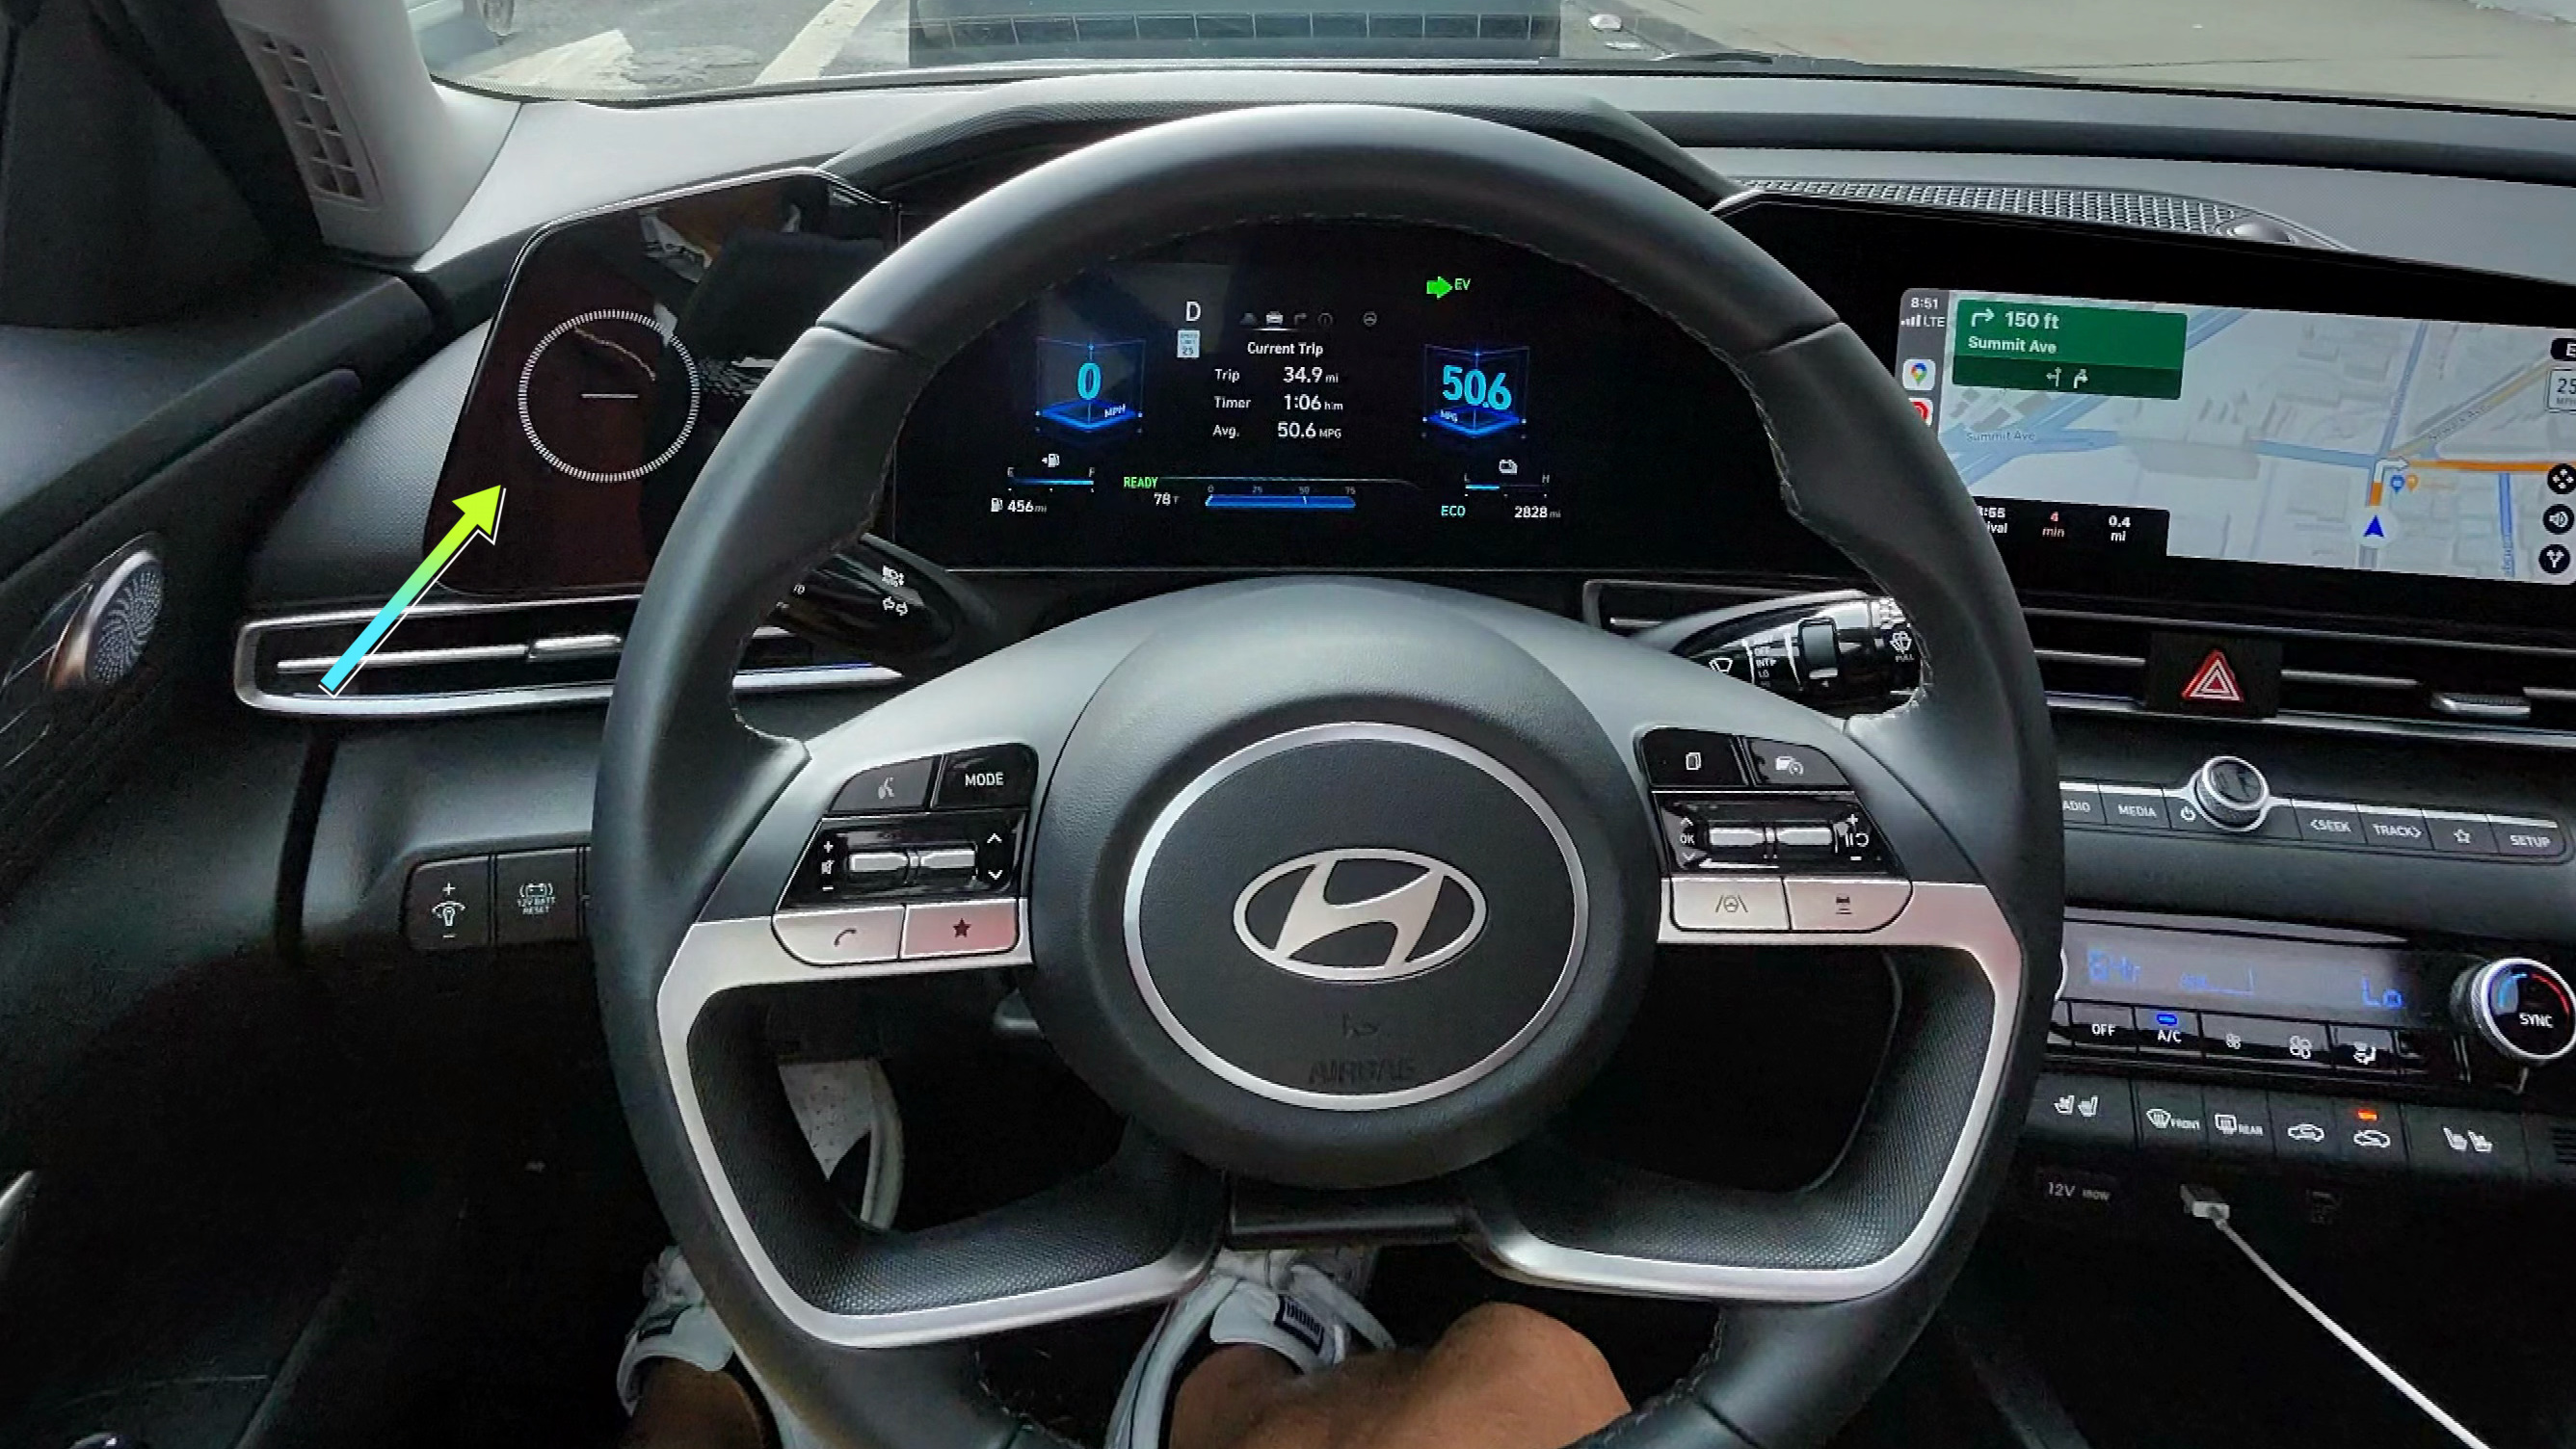 Dashboard view of the Hyundai Elantra Hybrid.